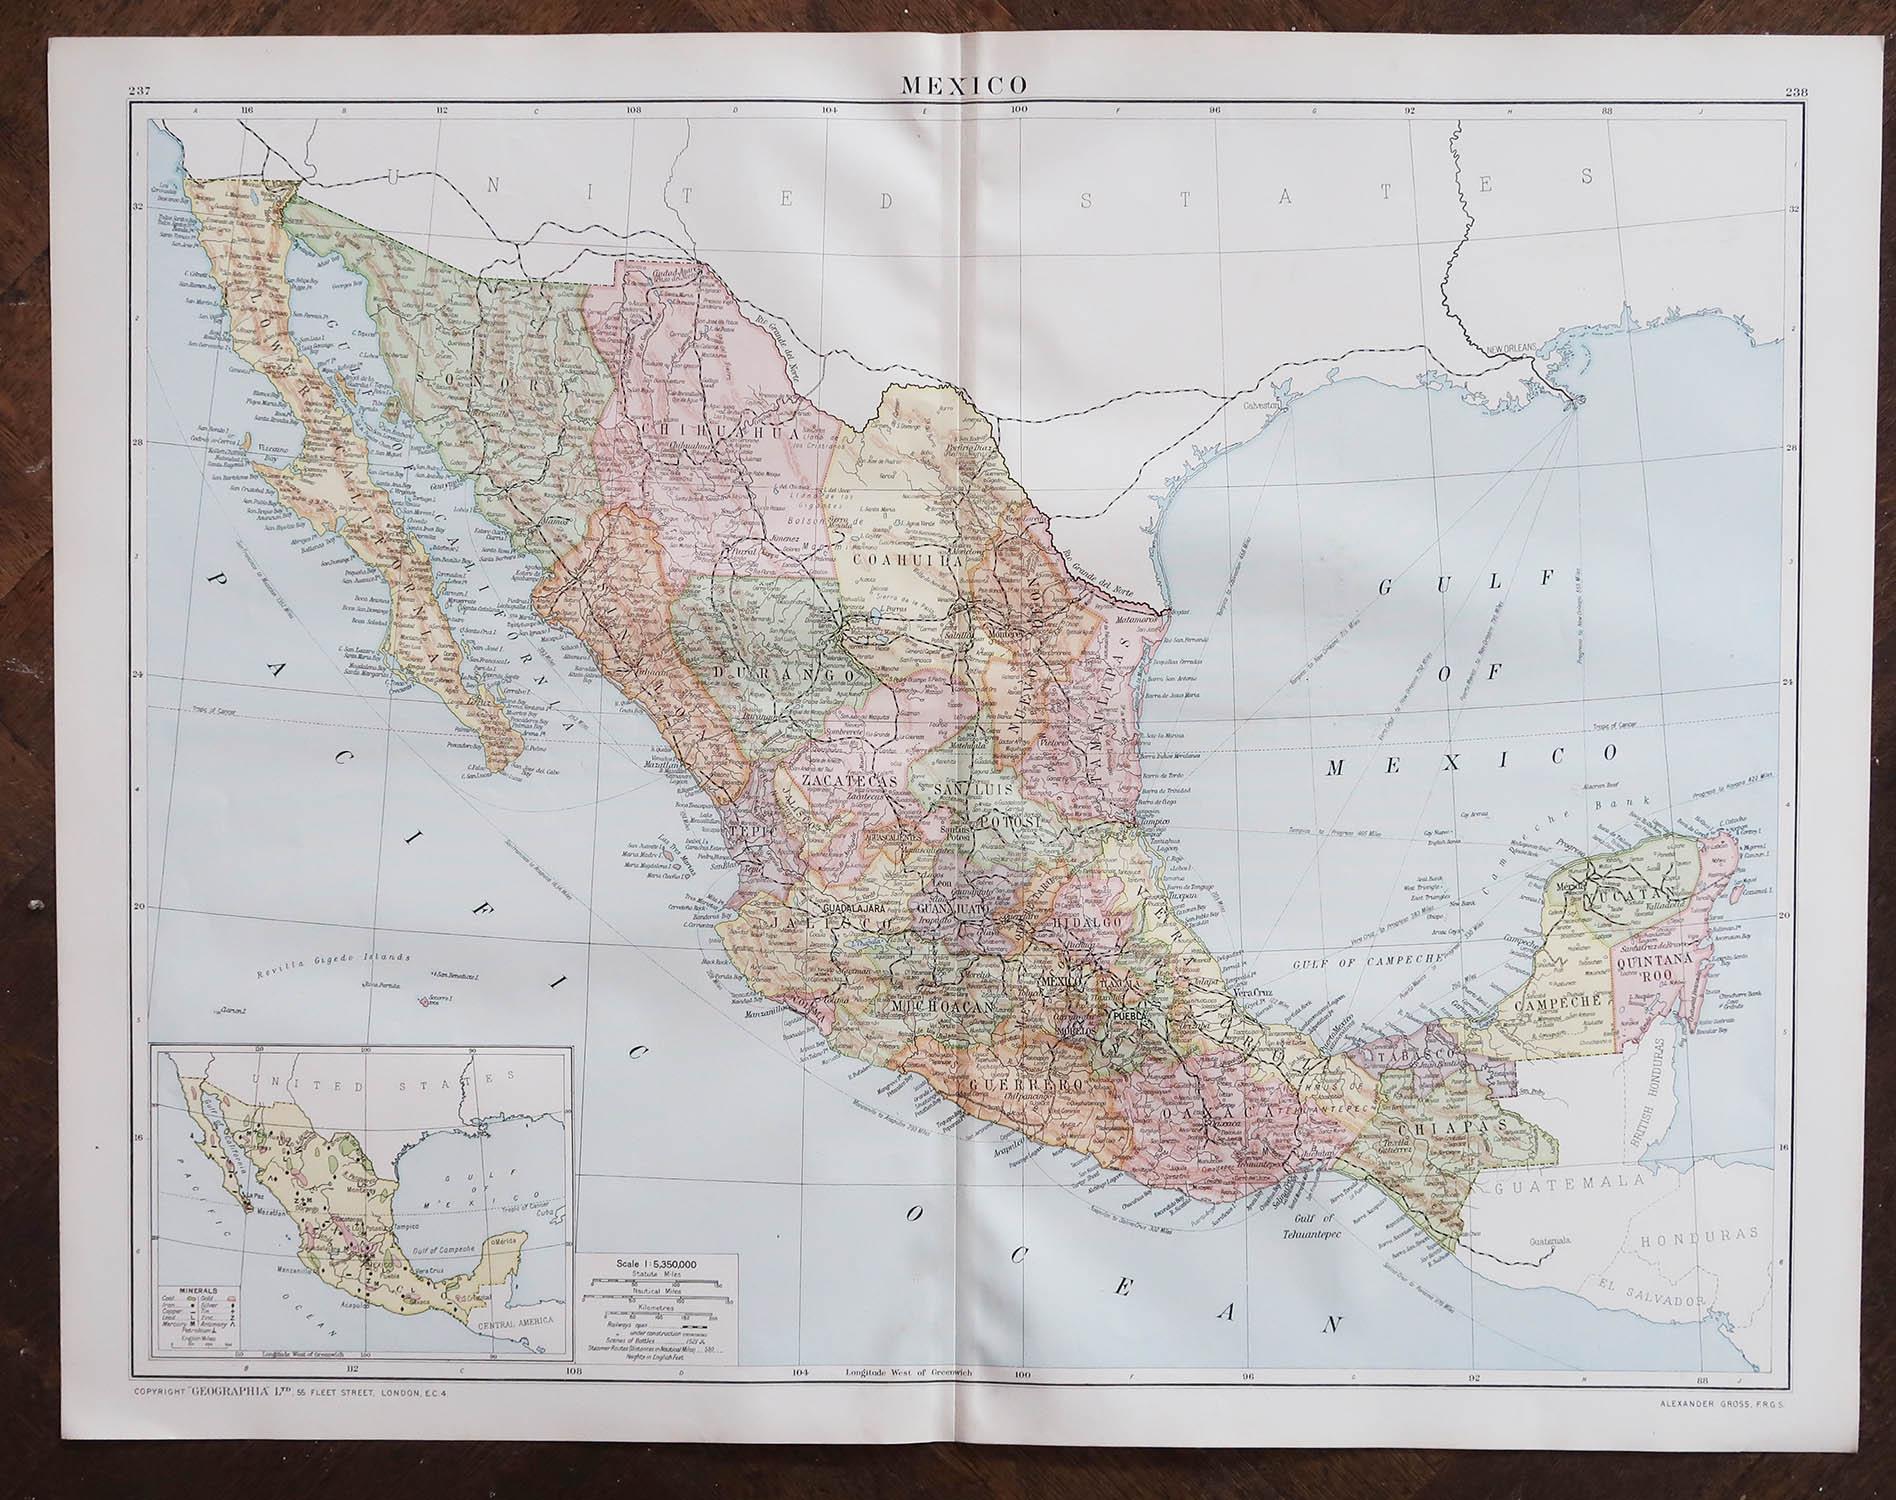 original territory of mexico